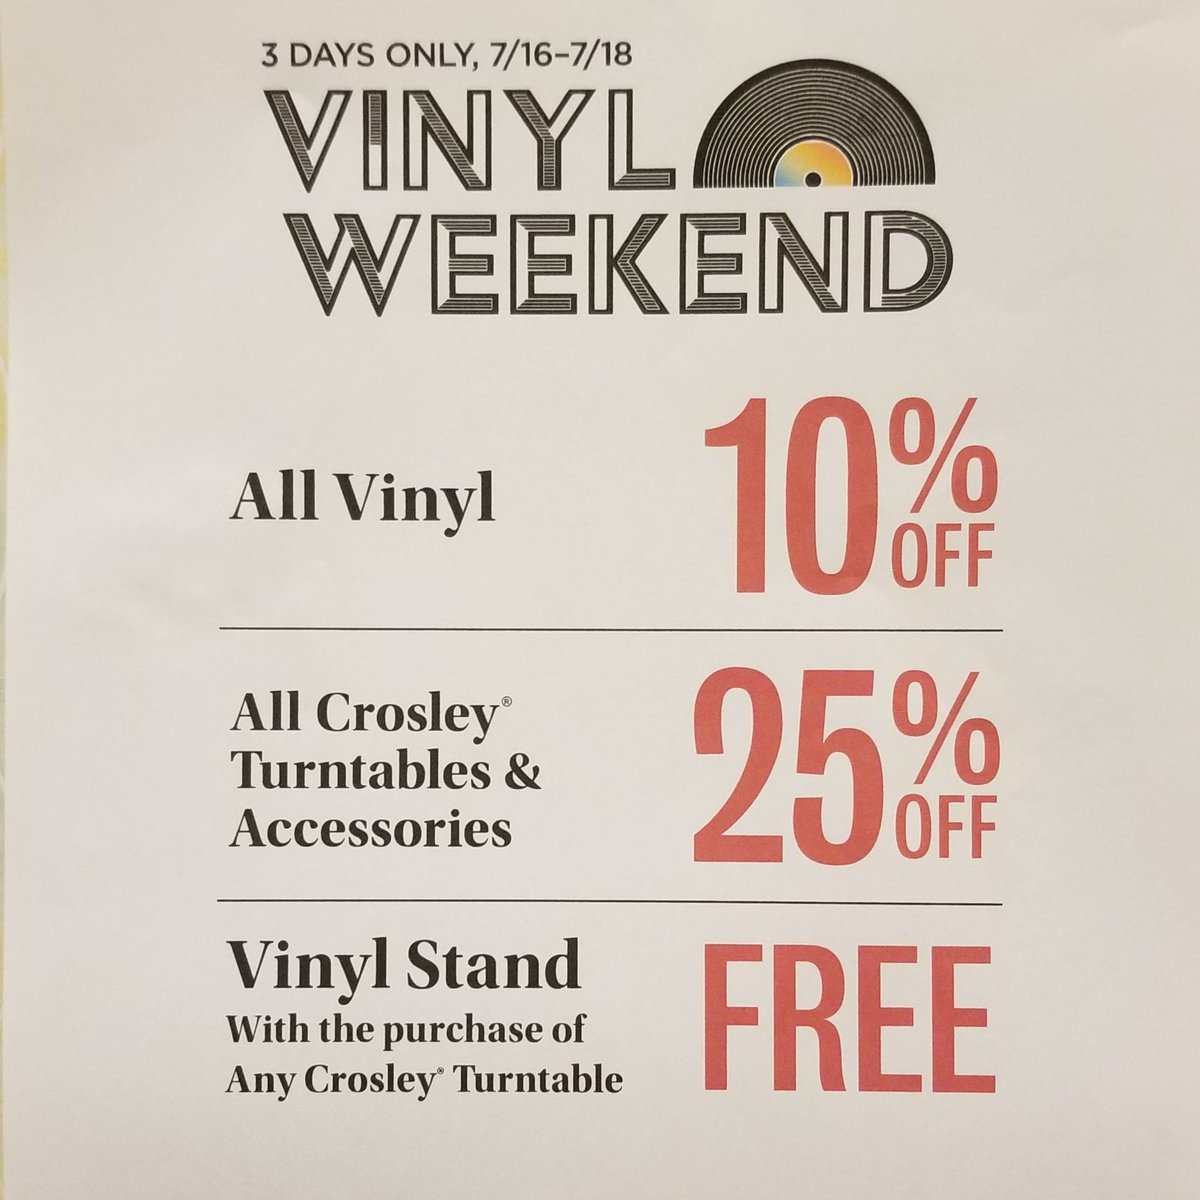 Last day for 10% off vinyl!
.
#BNVinyl
#BNClarendon 
#BNMyWeekendisBooked 
#VinylWeekend
#BNClarendonCrossing